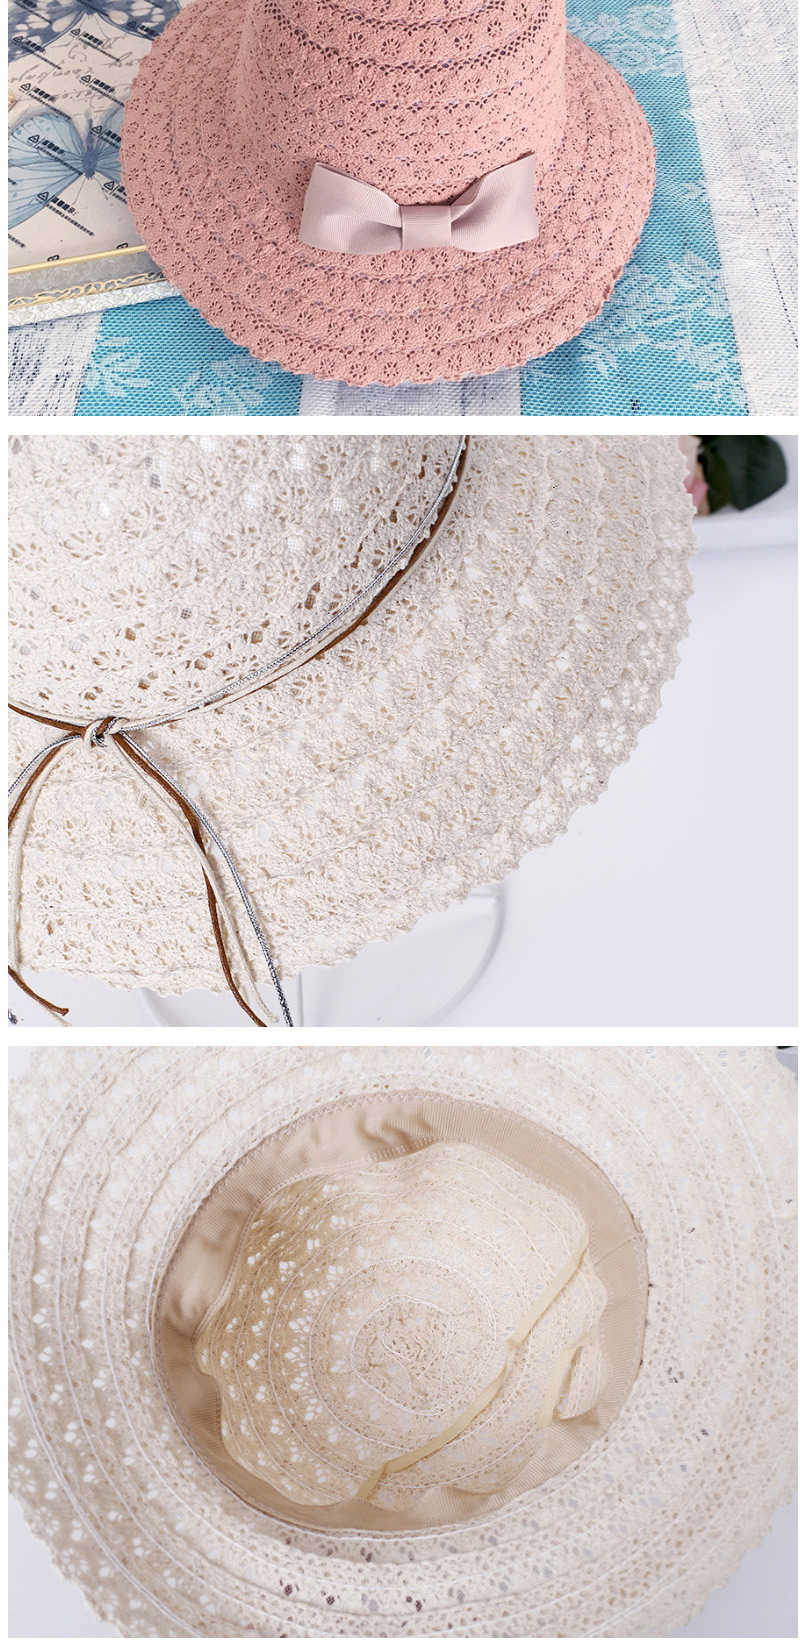 Fashion Khaki Hollow Out Design Bowknot Decorated Hat,Sun Hats